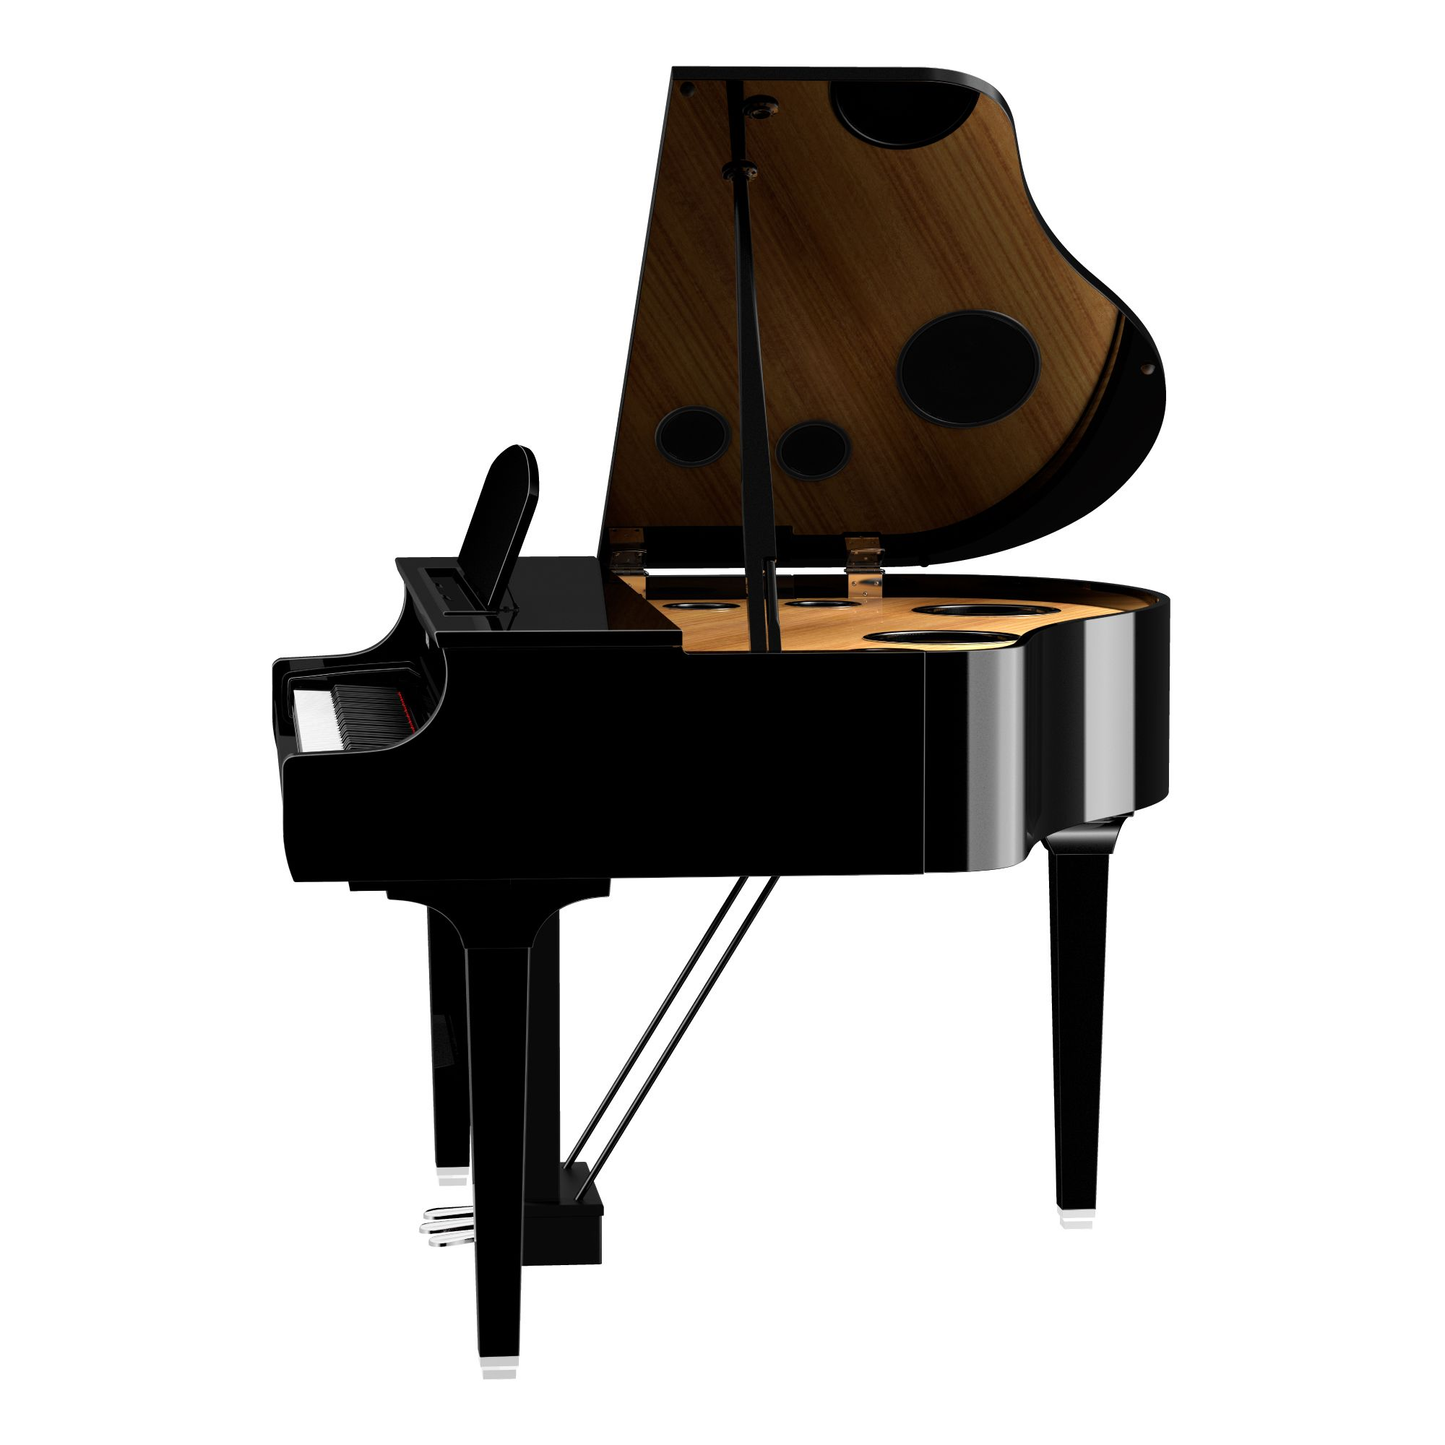 Clavinova de Cola CLP-795GP Grand Piano acabado Polished Ebony Yamaha